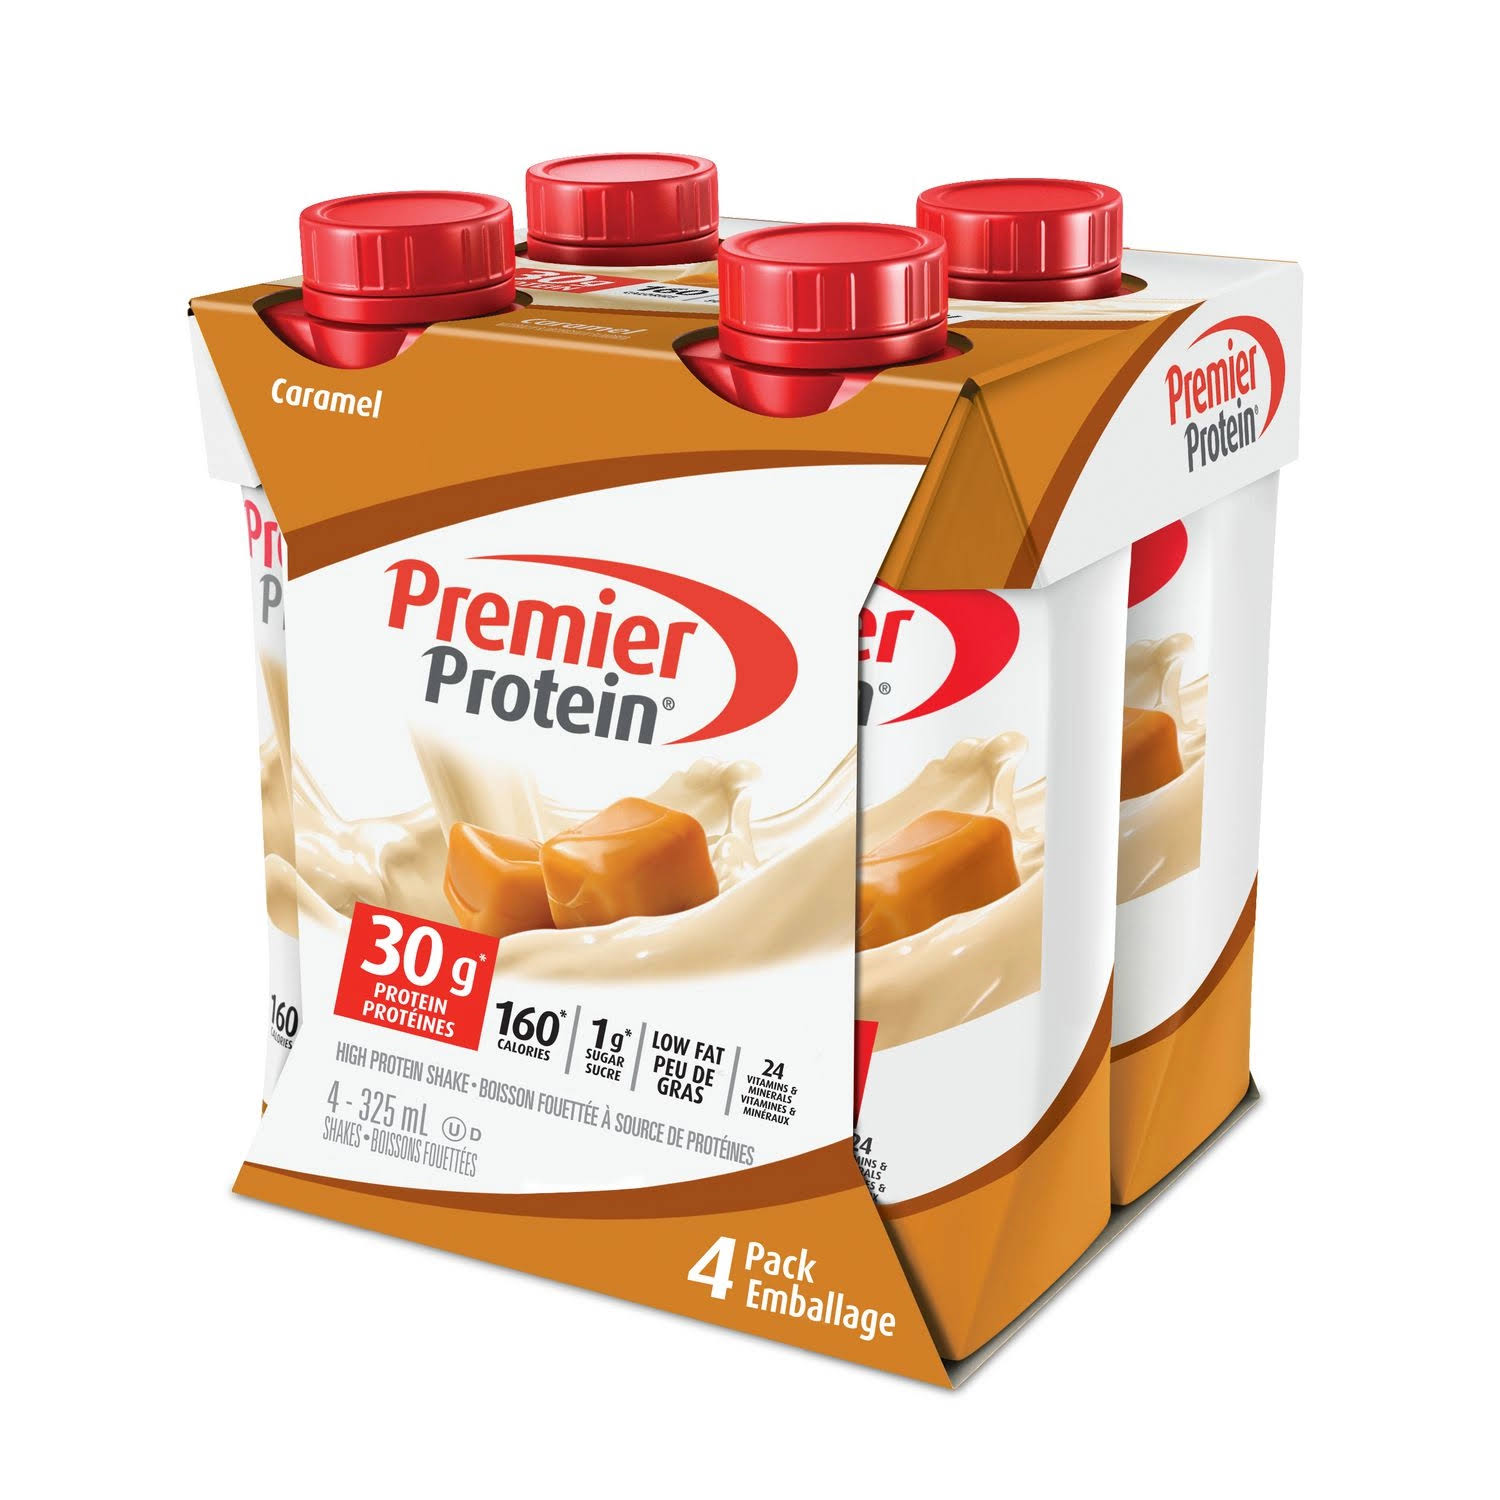 Premier Protein Caramel High Protein Shake - 4 Pack 4x325 ml